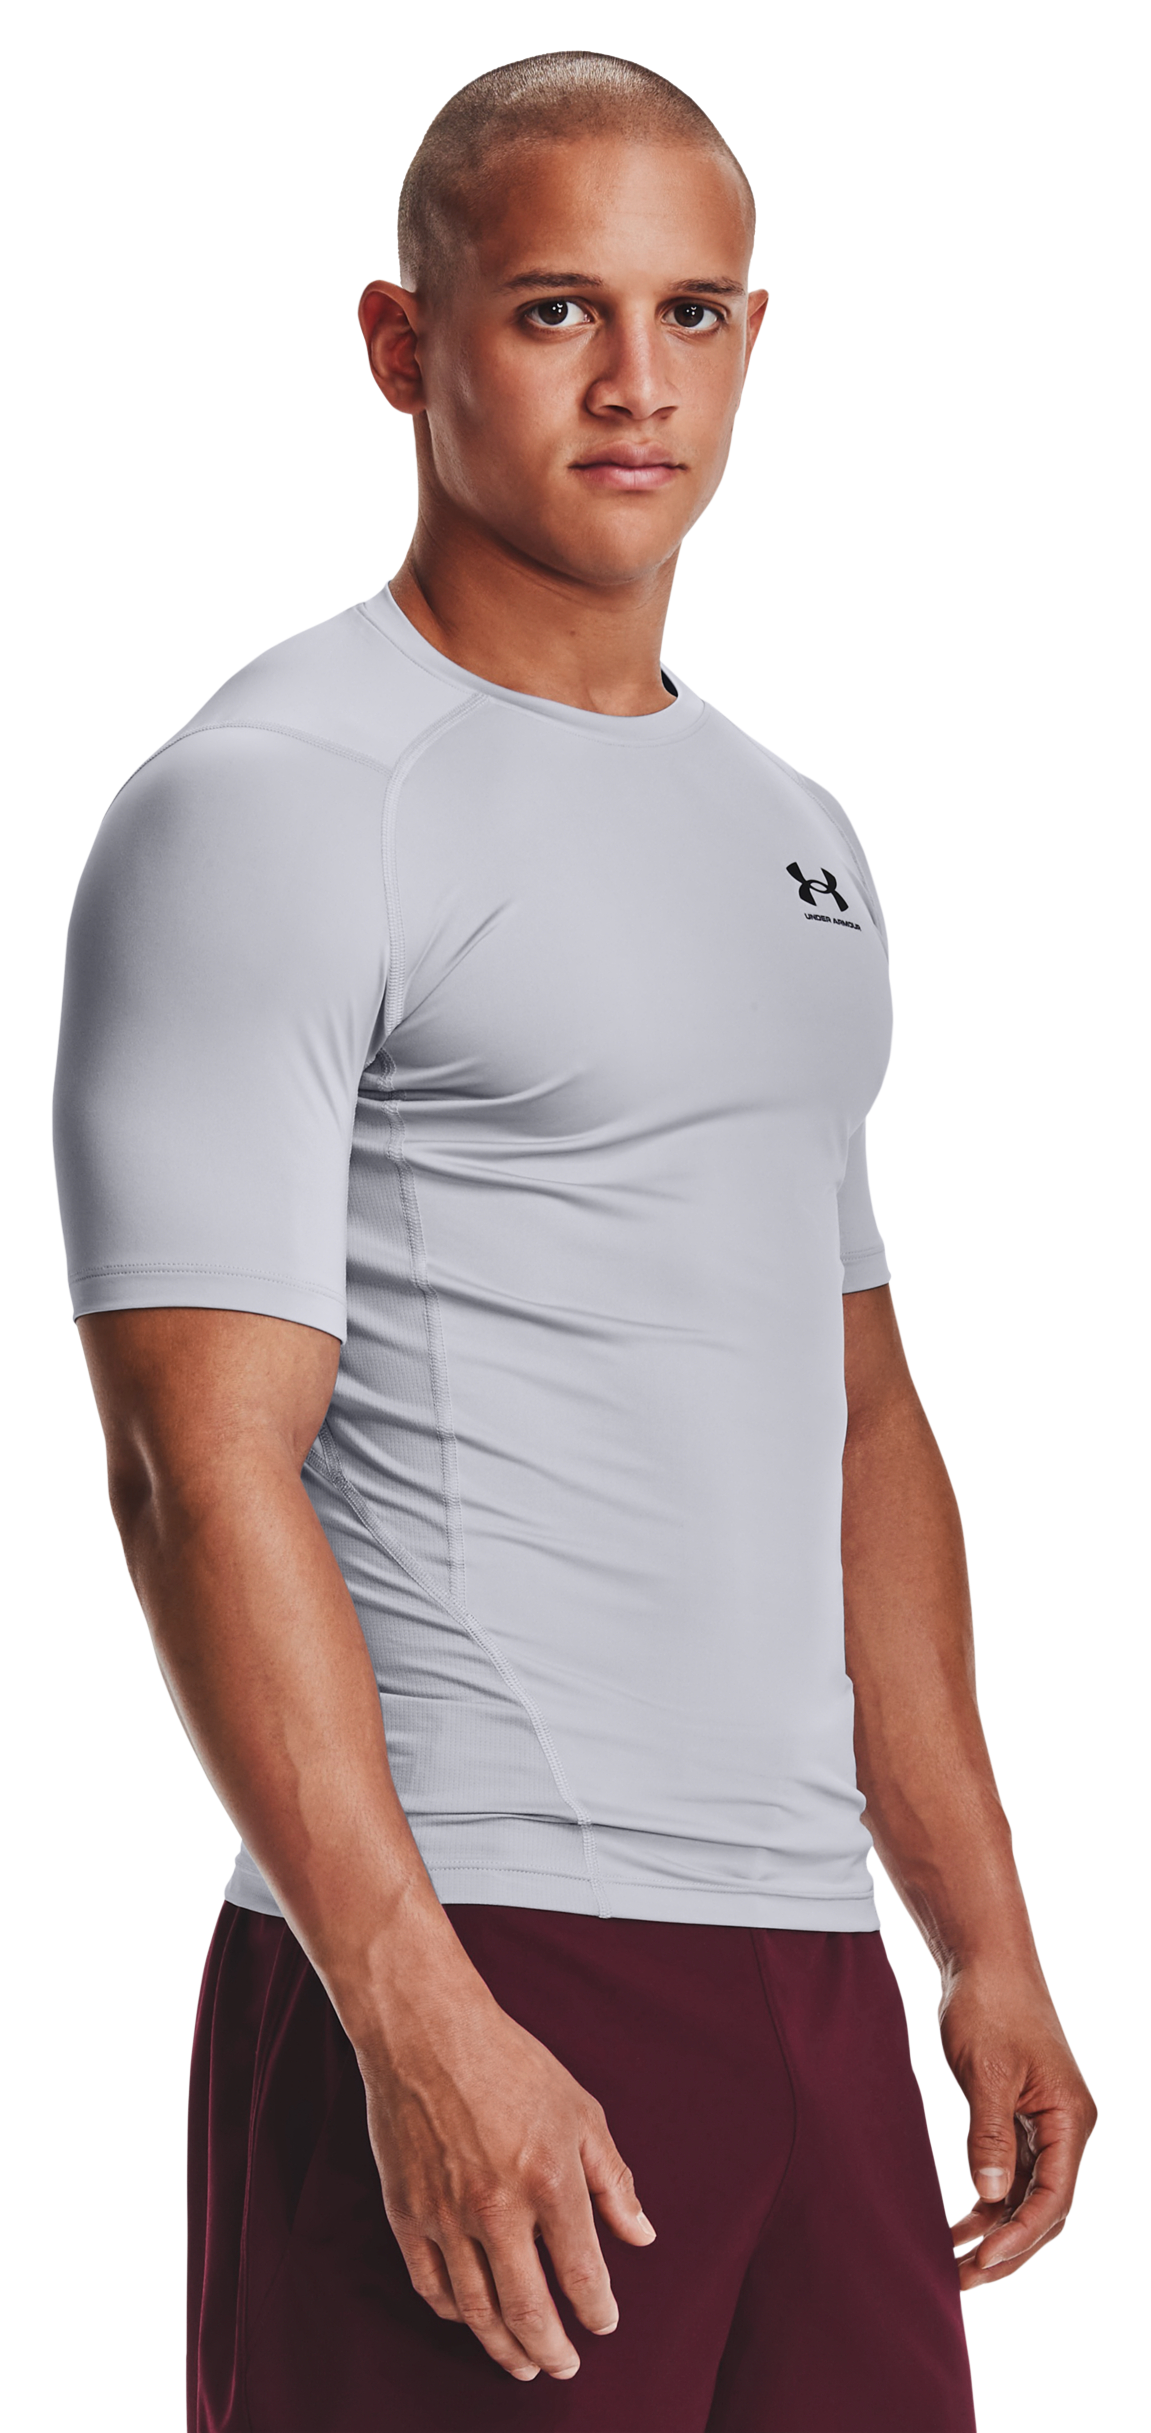 Under Armour HeatGear Short-Sleeve T-Shirt for Men - Mod Gray/Black - L